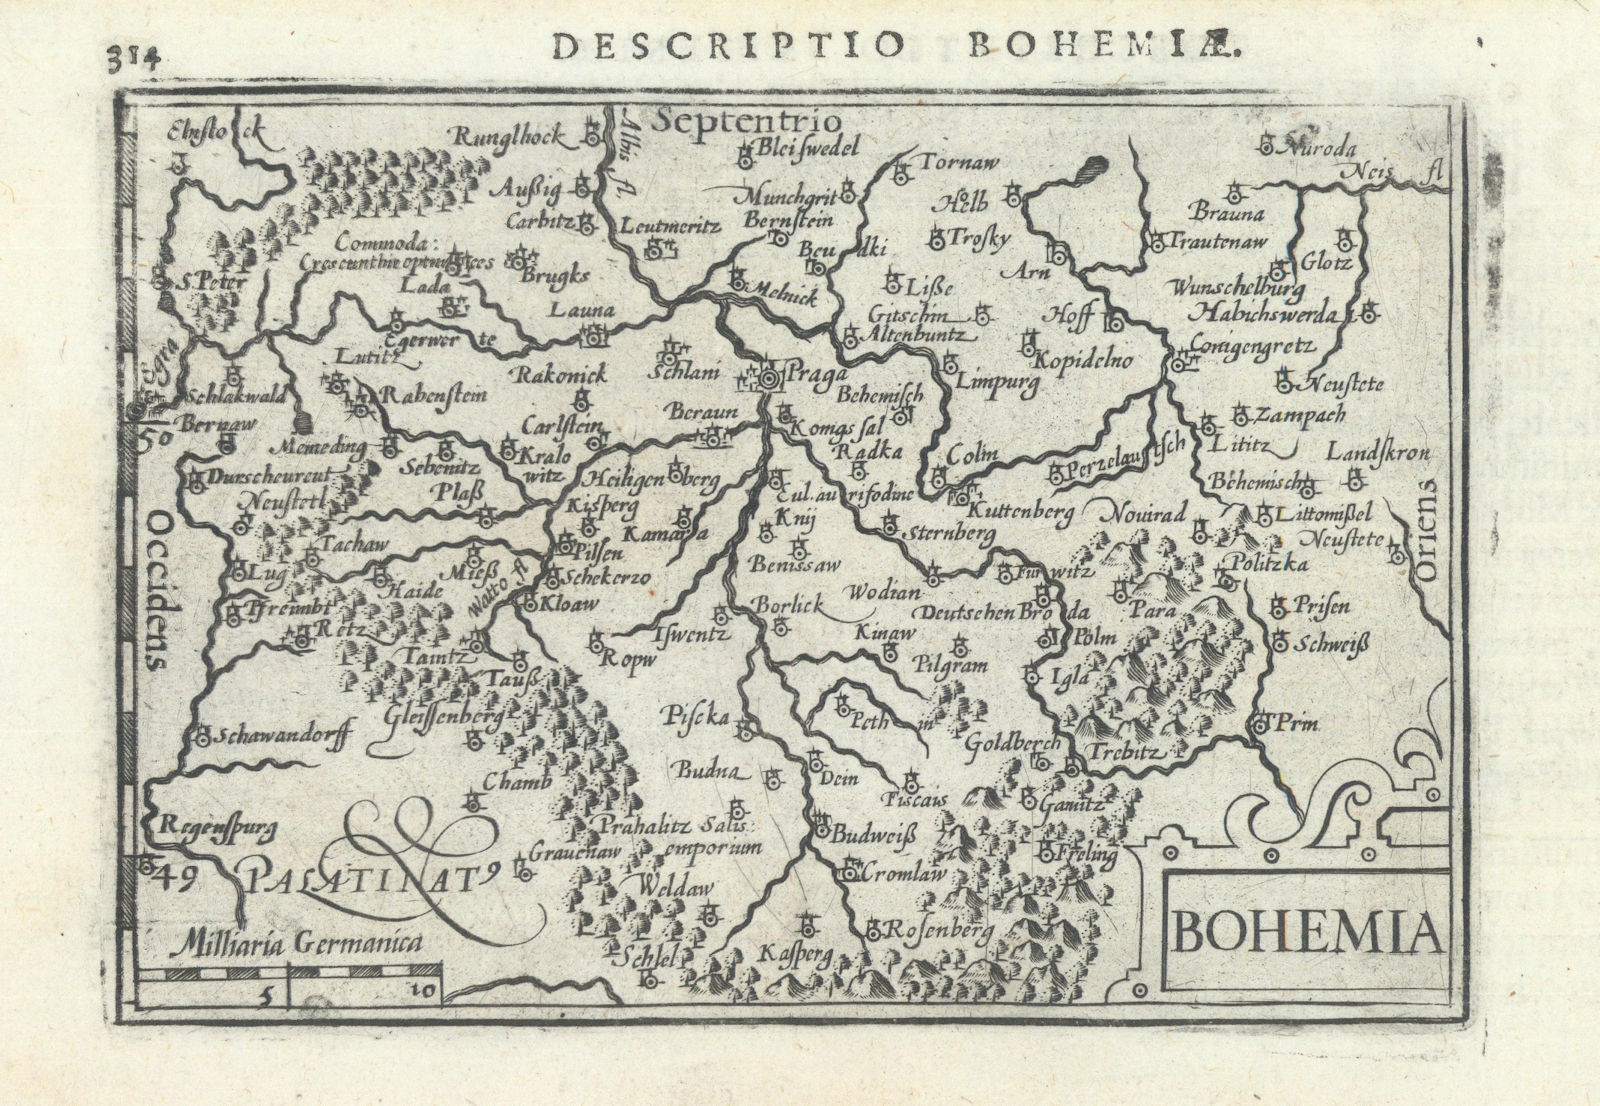 Bohemiae / Bohemia by Bertius / Langenes. Bohemia, Czechia 1603 old map